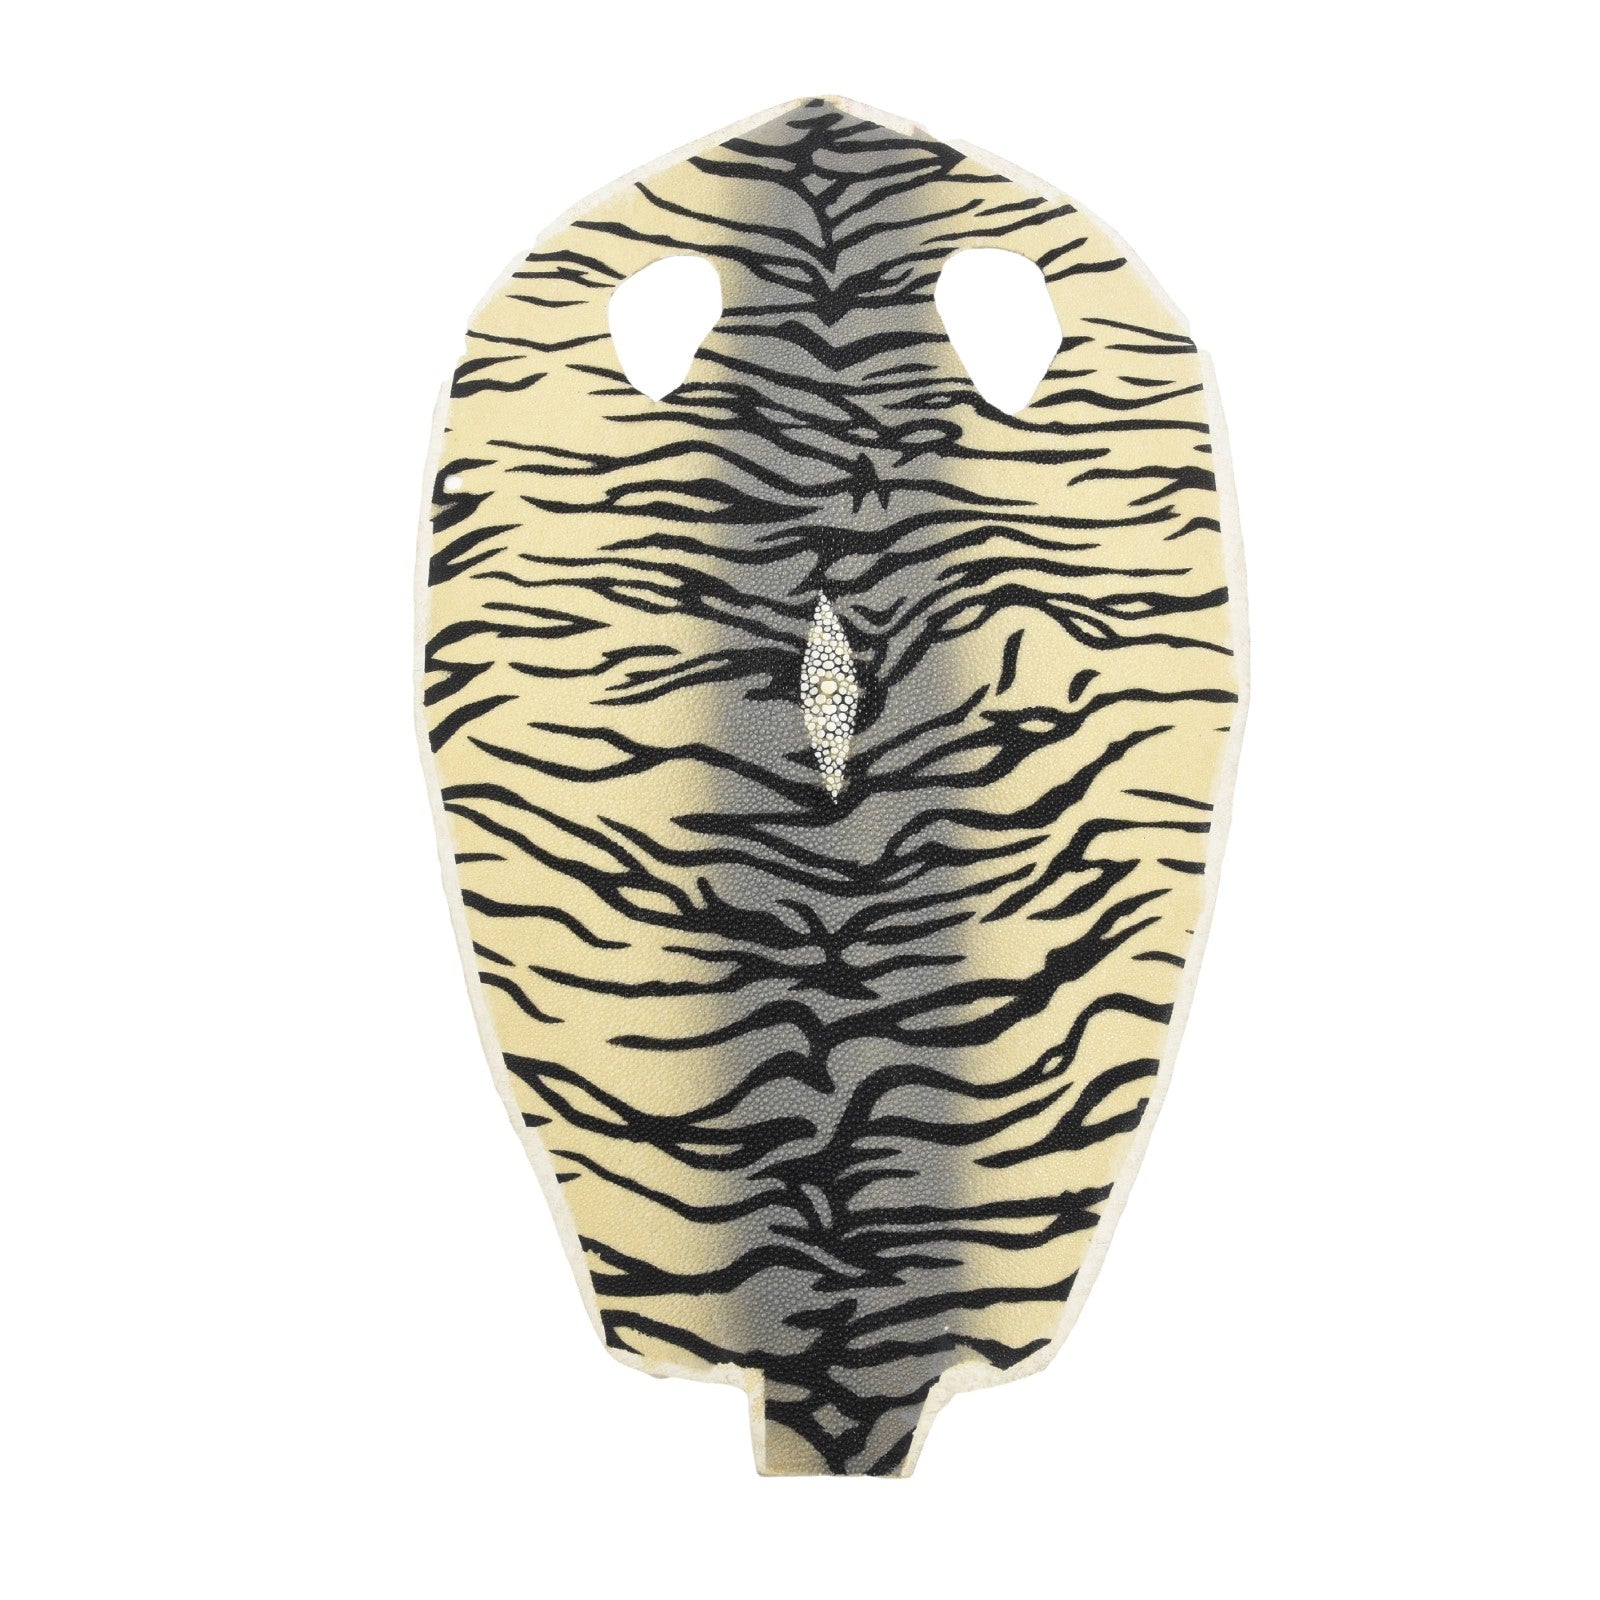 Tiger Striped Stingray Skins, 15" x 9", 3-4 oz, Tiger Stripe Grey | The Leather Guy